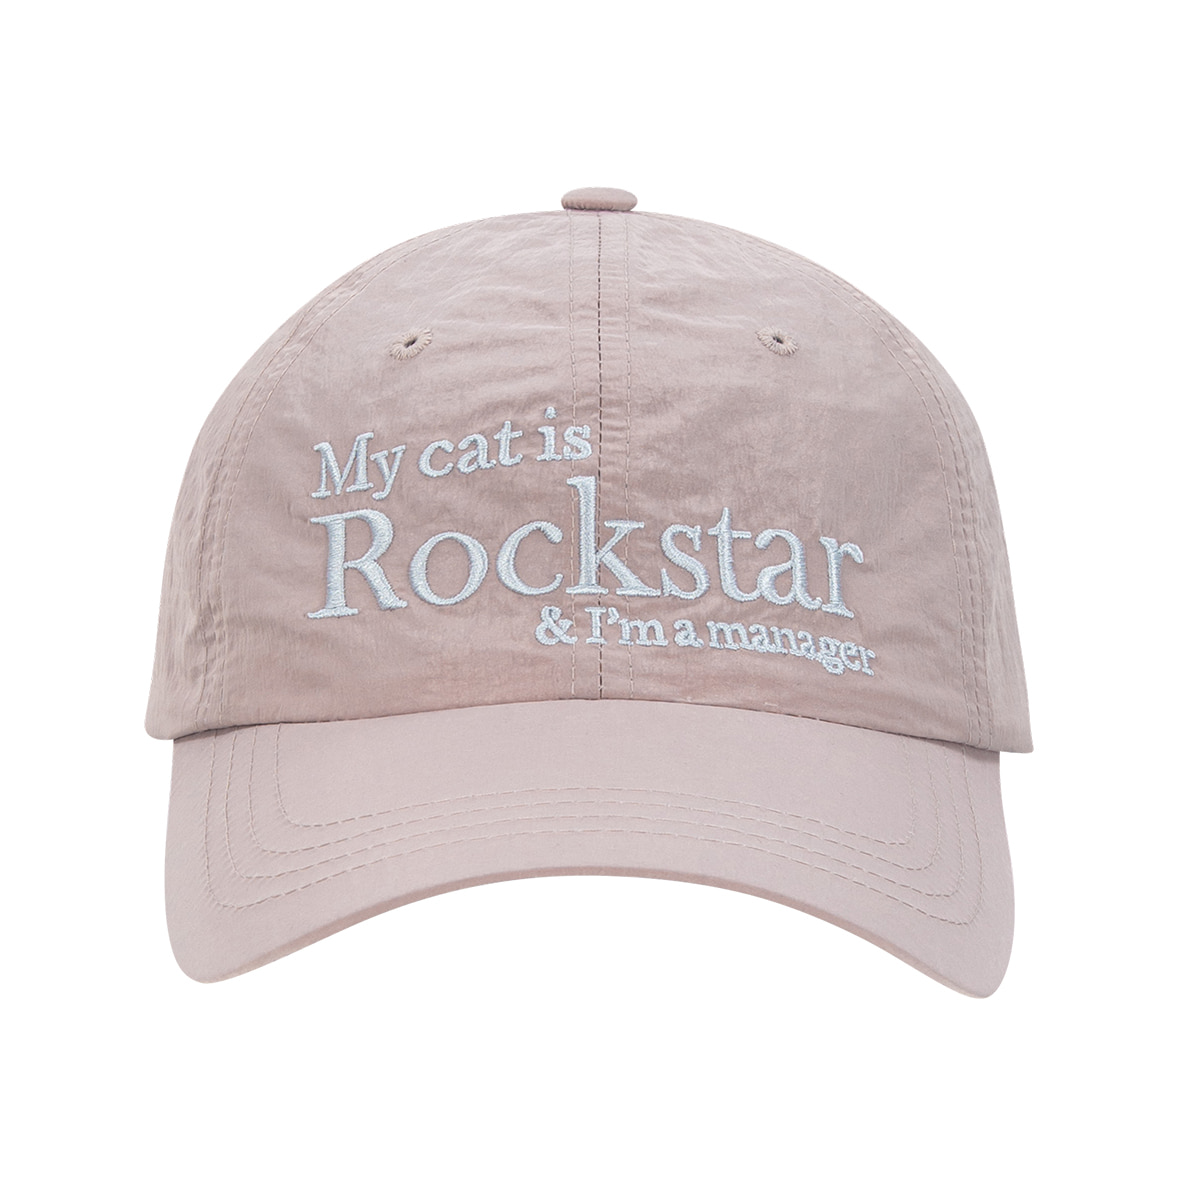 Rockstar cat cap (Baby Pink)